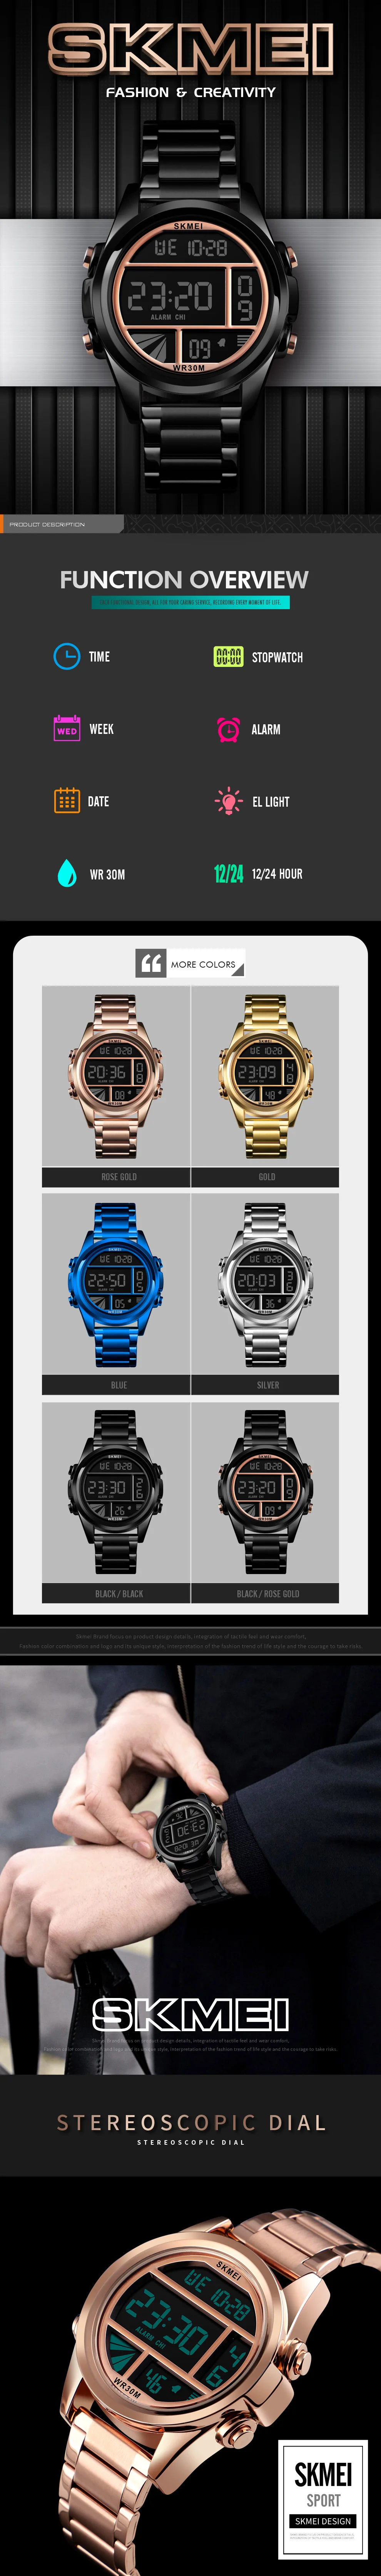 Wholesale watches Skmei 1448 digital waterproof luxury watch strap metal watch for men clock